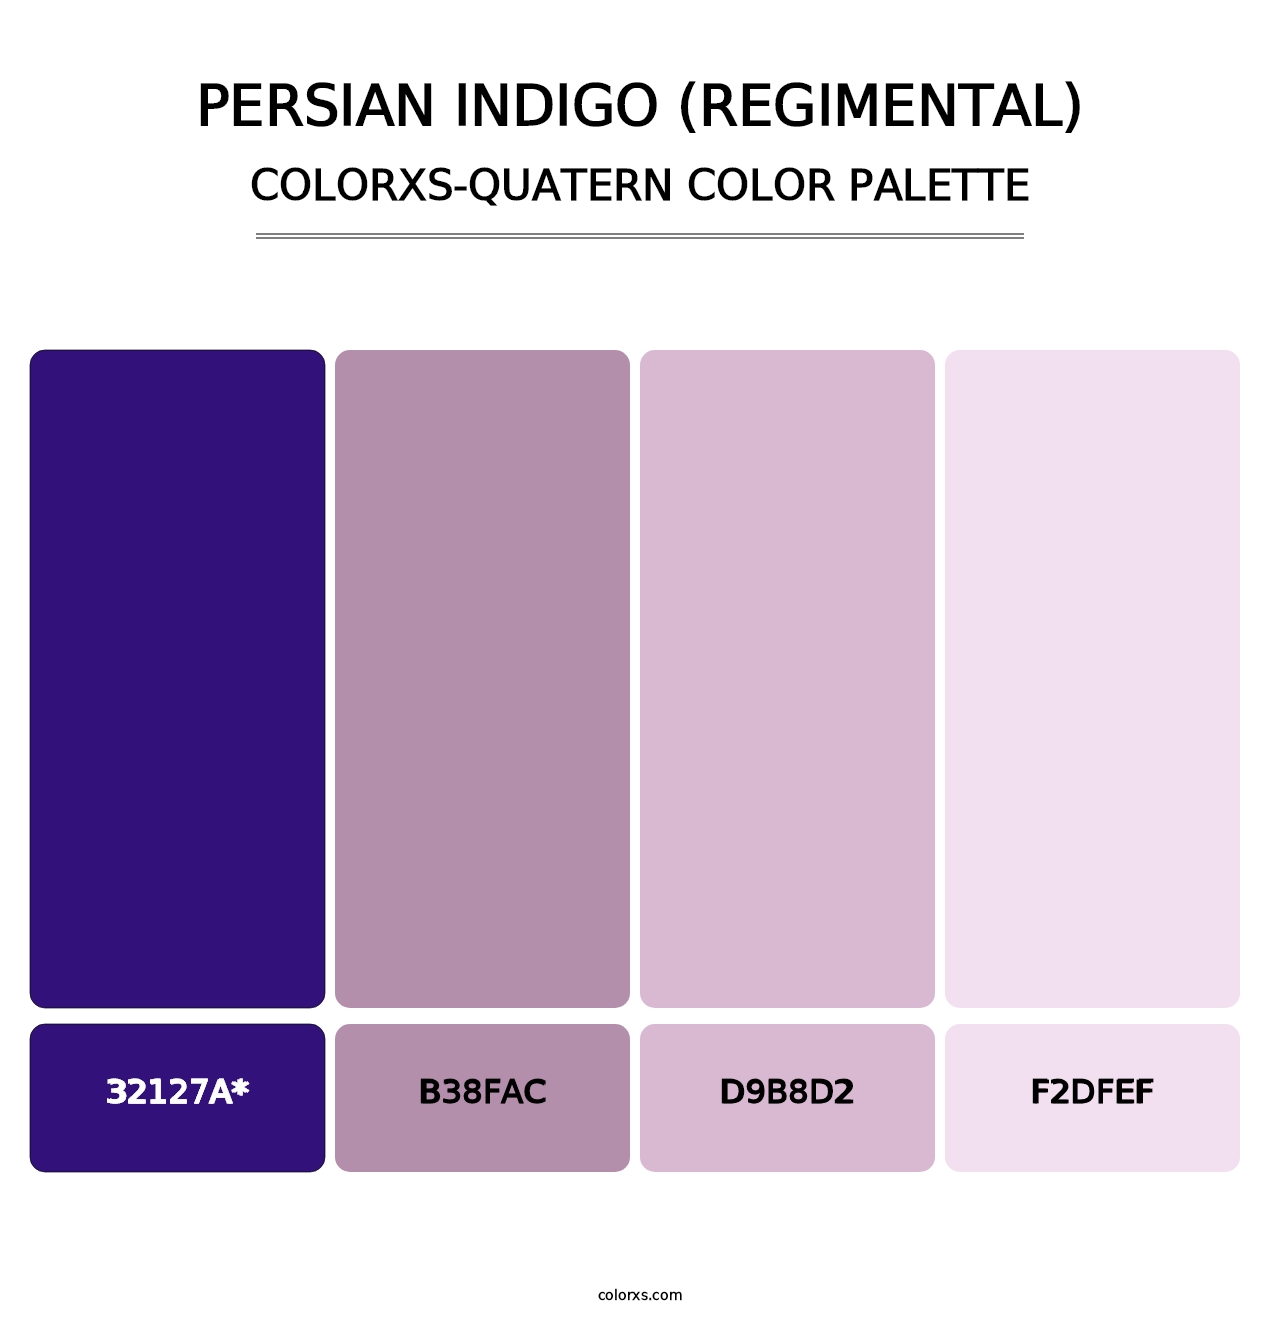 Persian Indigo (Regimental) - Colorxs Quatern Palette